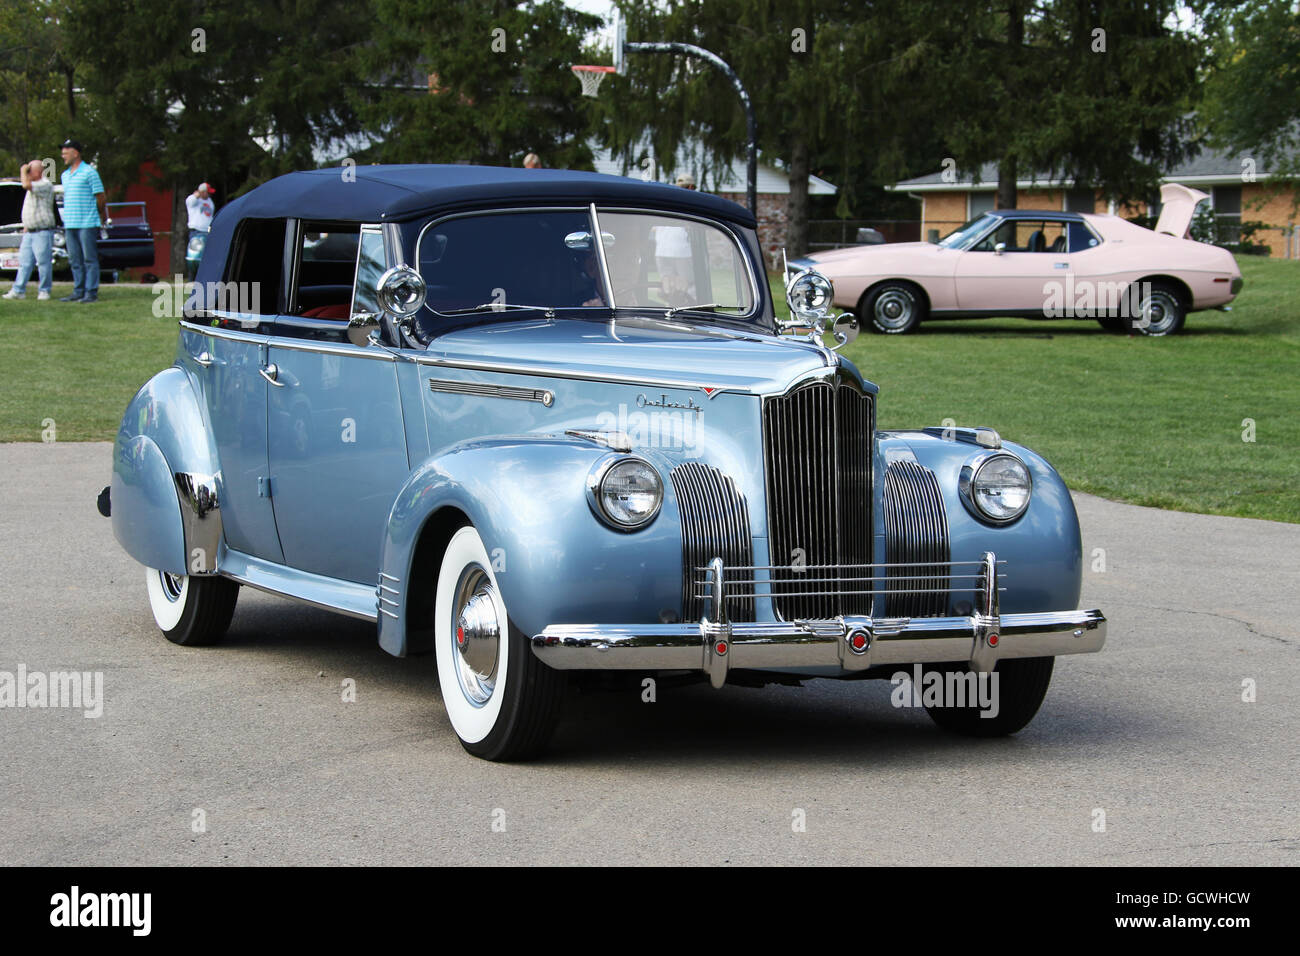 Auto- 1940 Packard One Twenty. Blue. Convertible. Beavercreek Popcorn Festival. Beavercreek, Dayton, Ohio, USA. Stock Photo